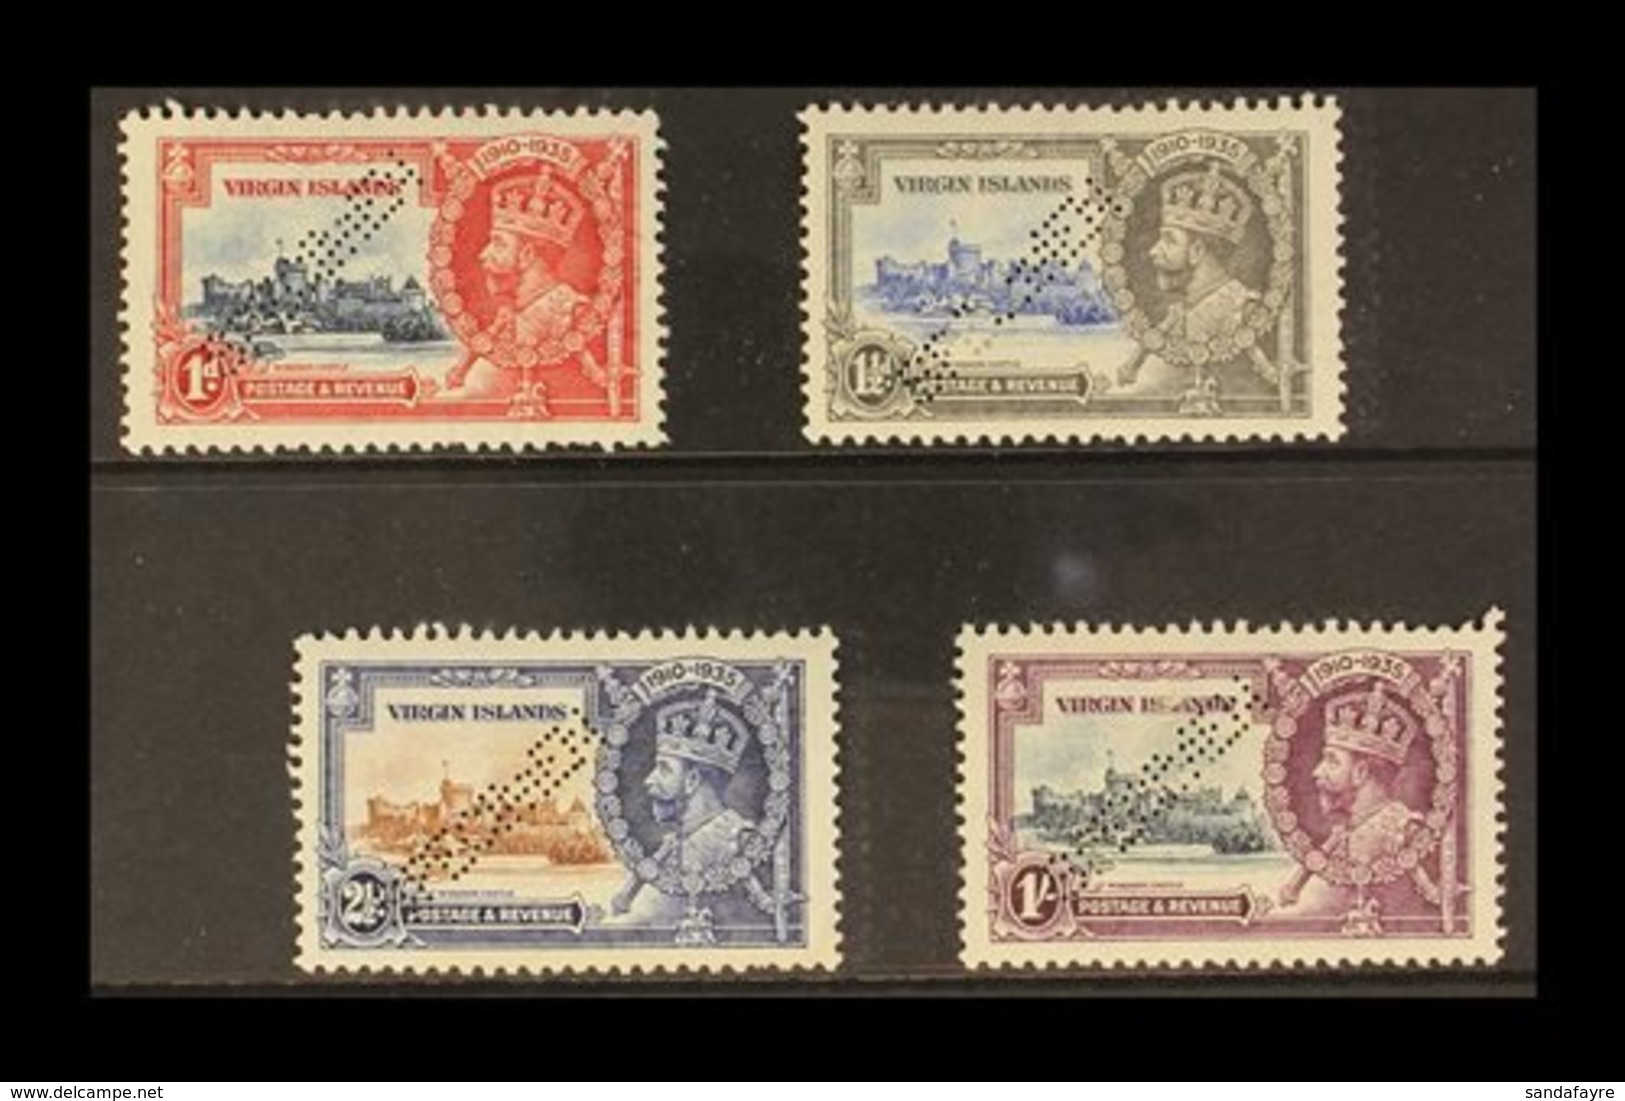 1935 Silver Jubilee Complete Set Perforated "SPECIMEN", SG 103s/106s, Fine Mint. (4 Stamps) For More Images, Please Visi - Iles Vièrges Britanniques